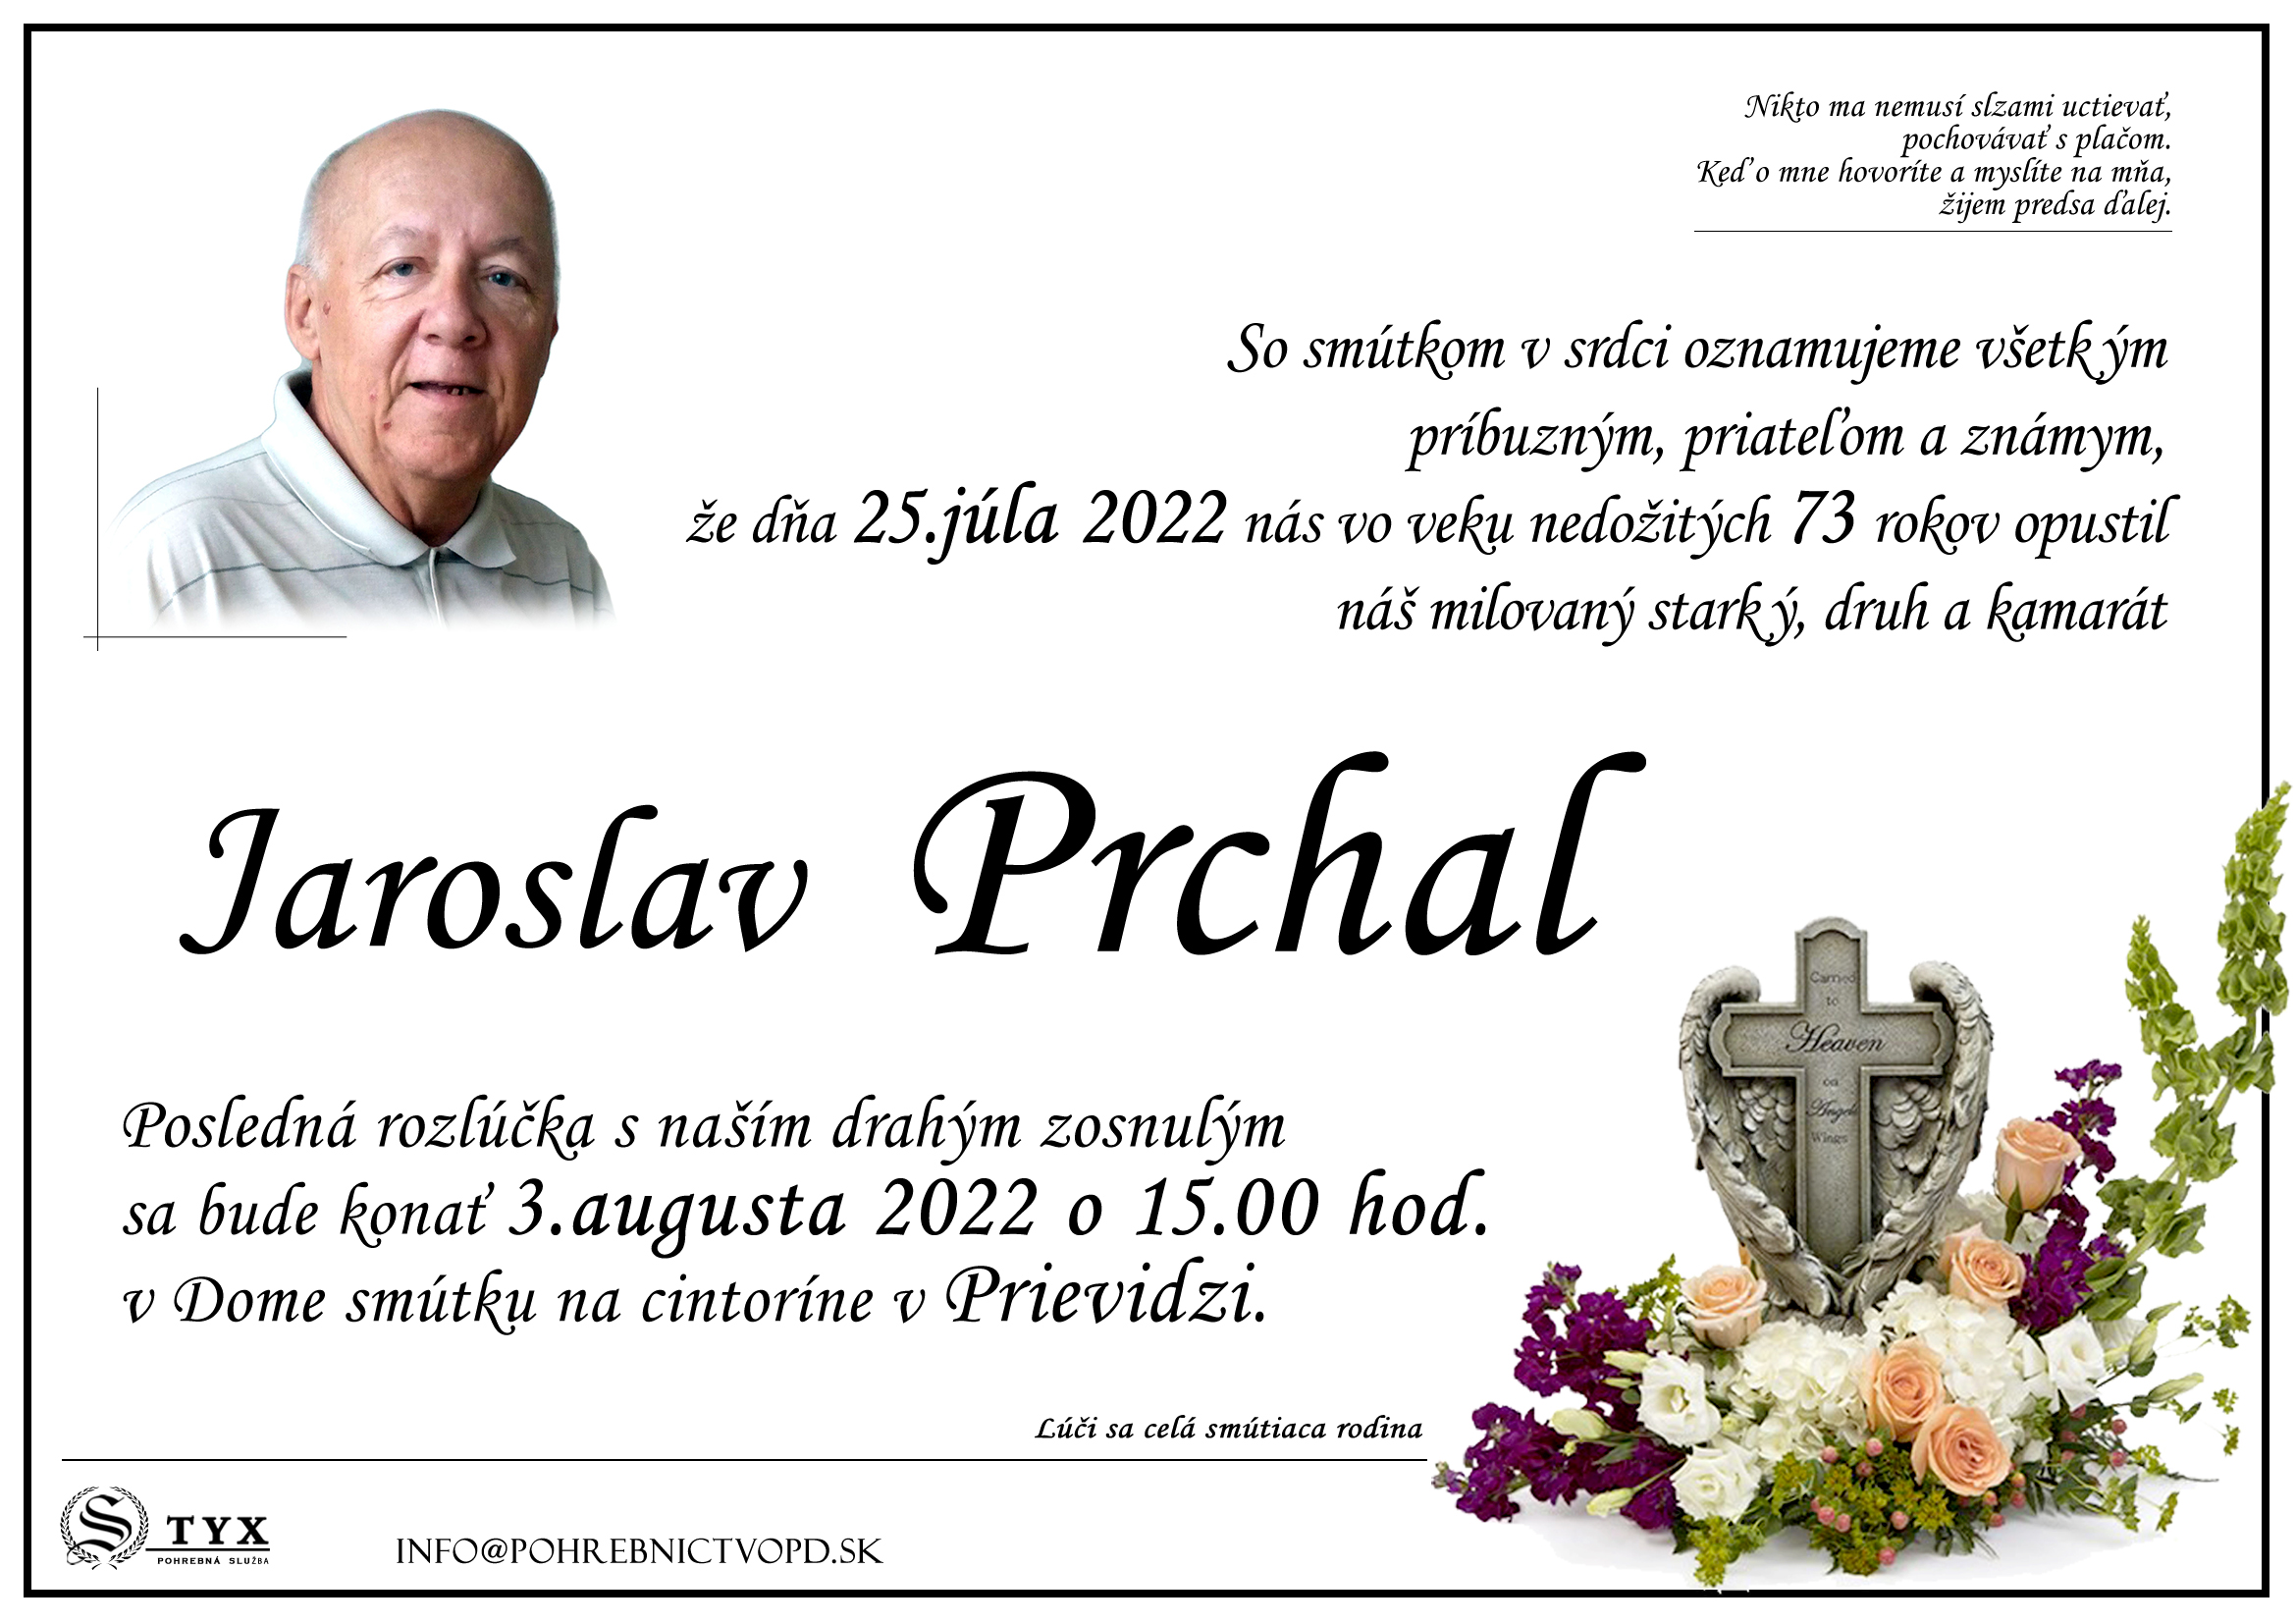 Jaroslav Prchal - parte